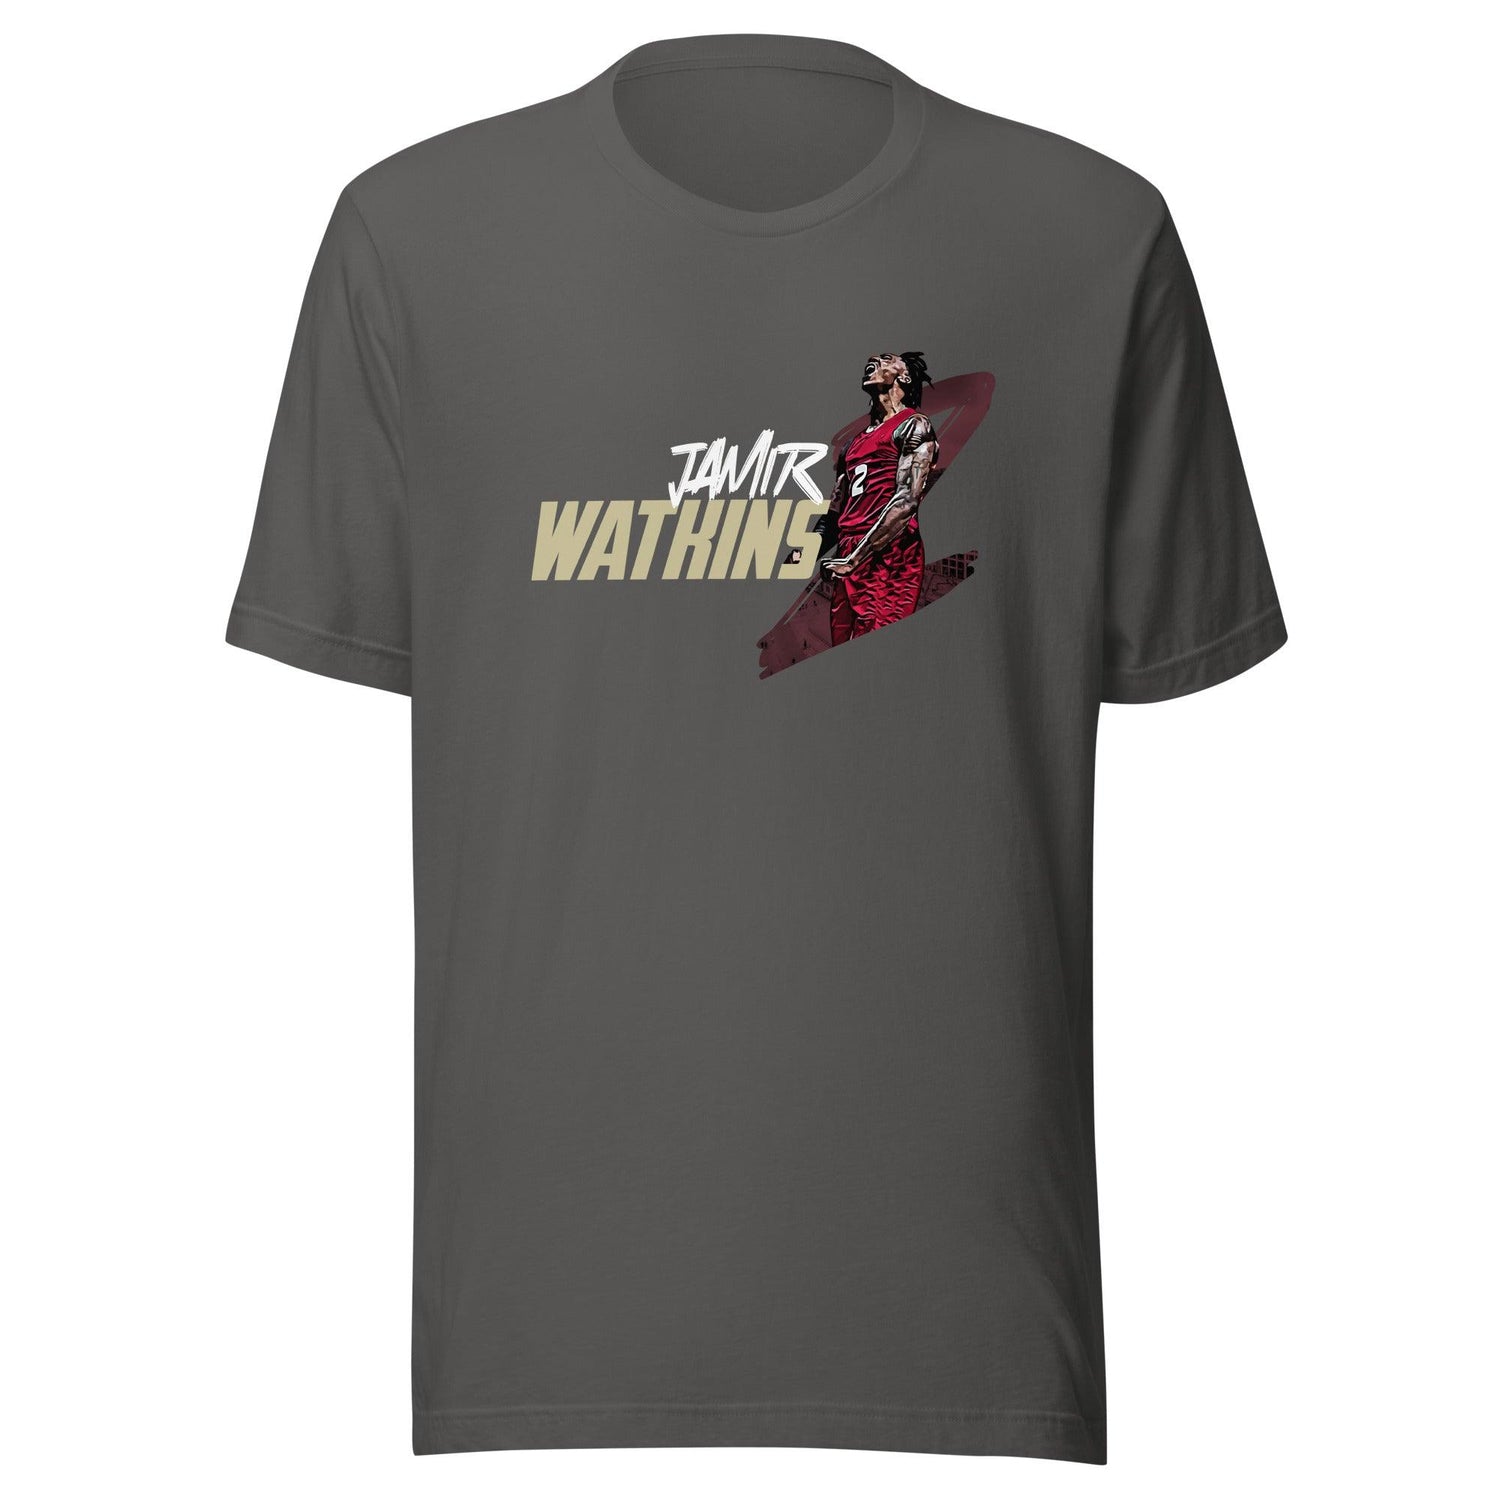 Jamir Watkins "Signature" t-shirt - Fan Arch